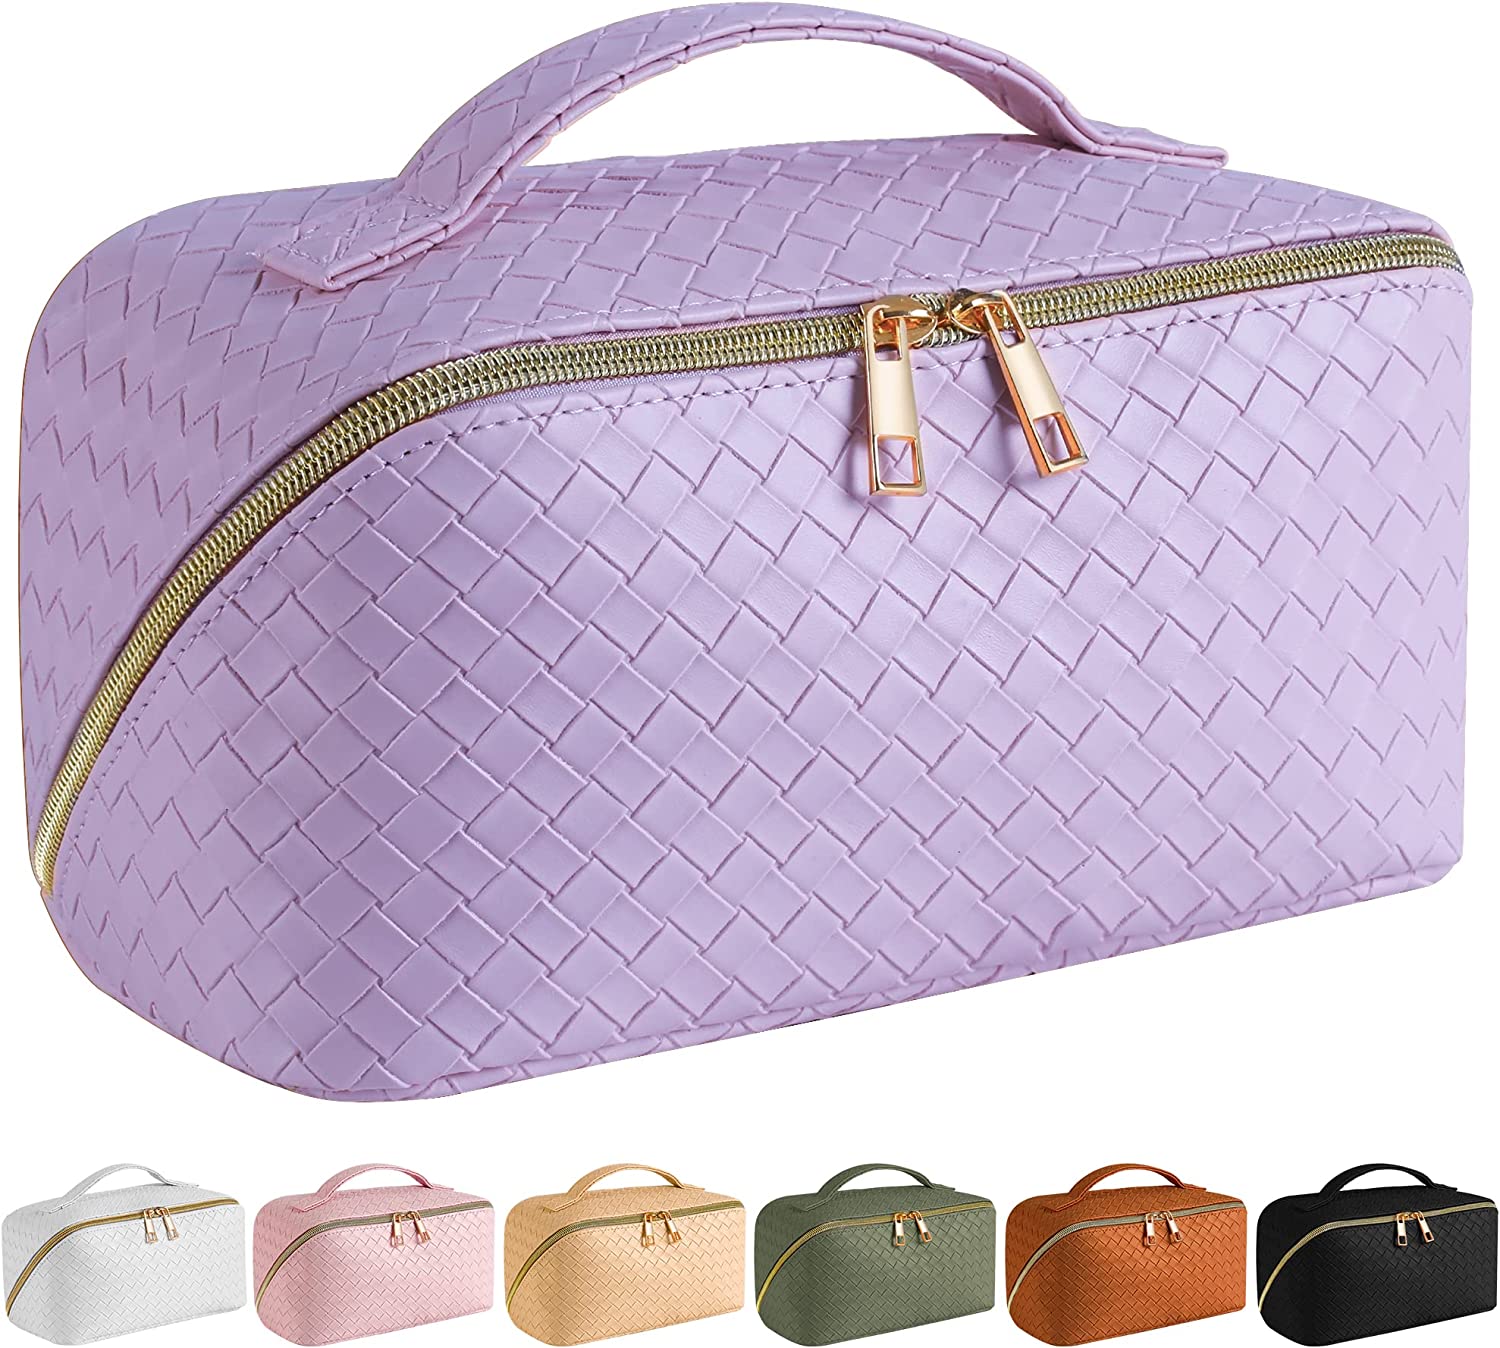 Large Capacity Travel Cosmetic Bag - Makeup Bag, PU Leather Waterproof Cosmetic Bag, Women Portable Travel Makeup Bag With Handle and Divider Flat Lay Makeup Organizer Bag